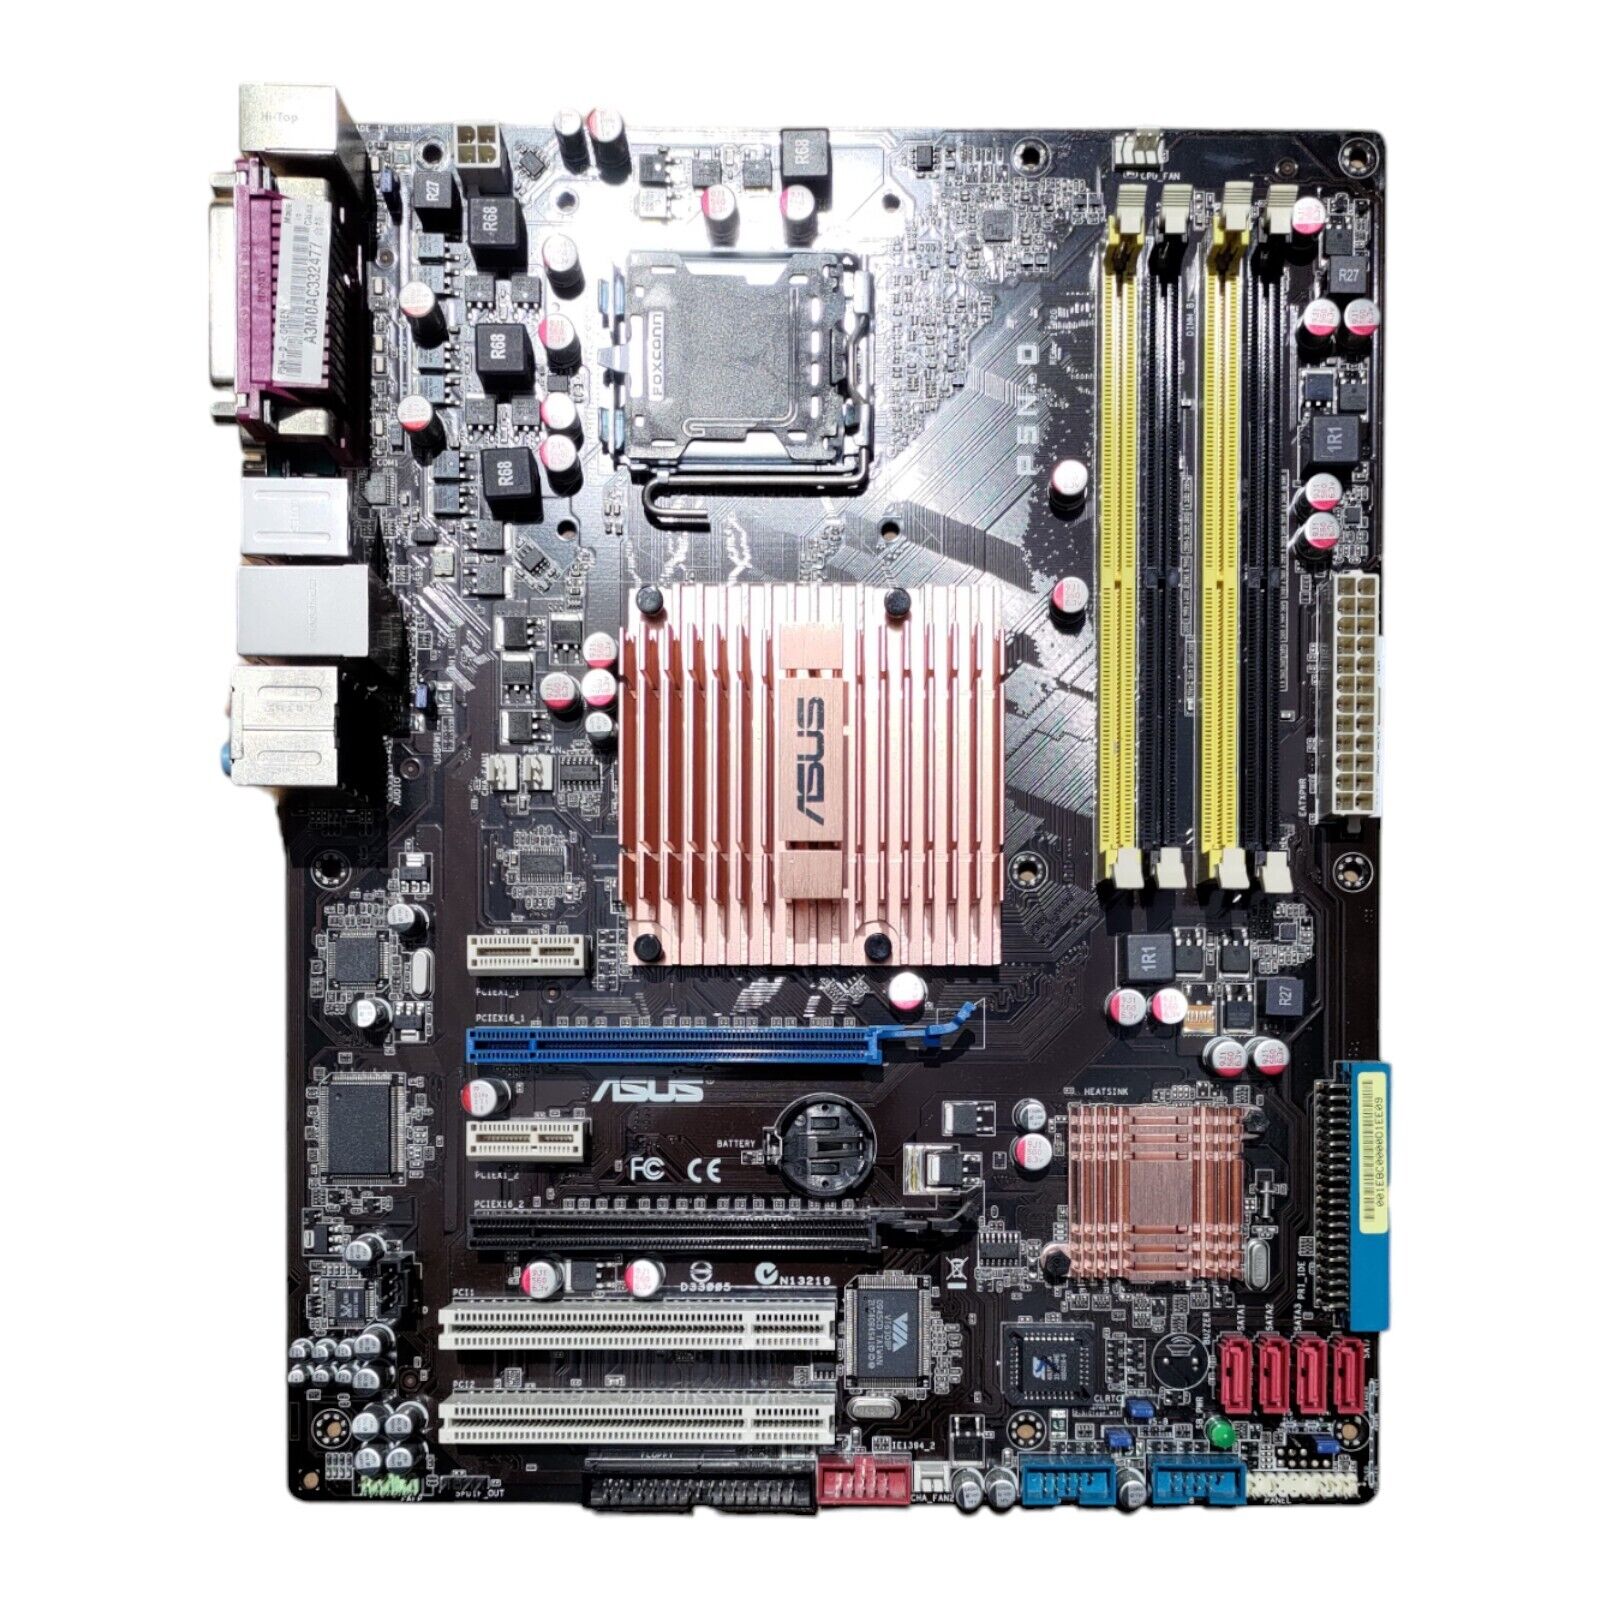 ASUS P5N-D Intel LGA 775 DDR2 ATX Motherboard - Supports Intel Core 2 Duo/Quad